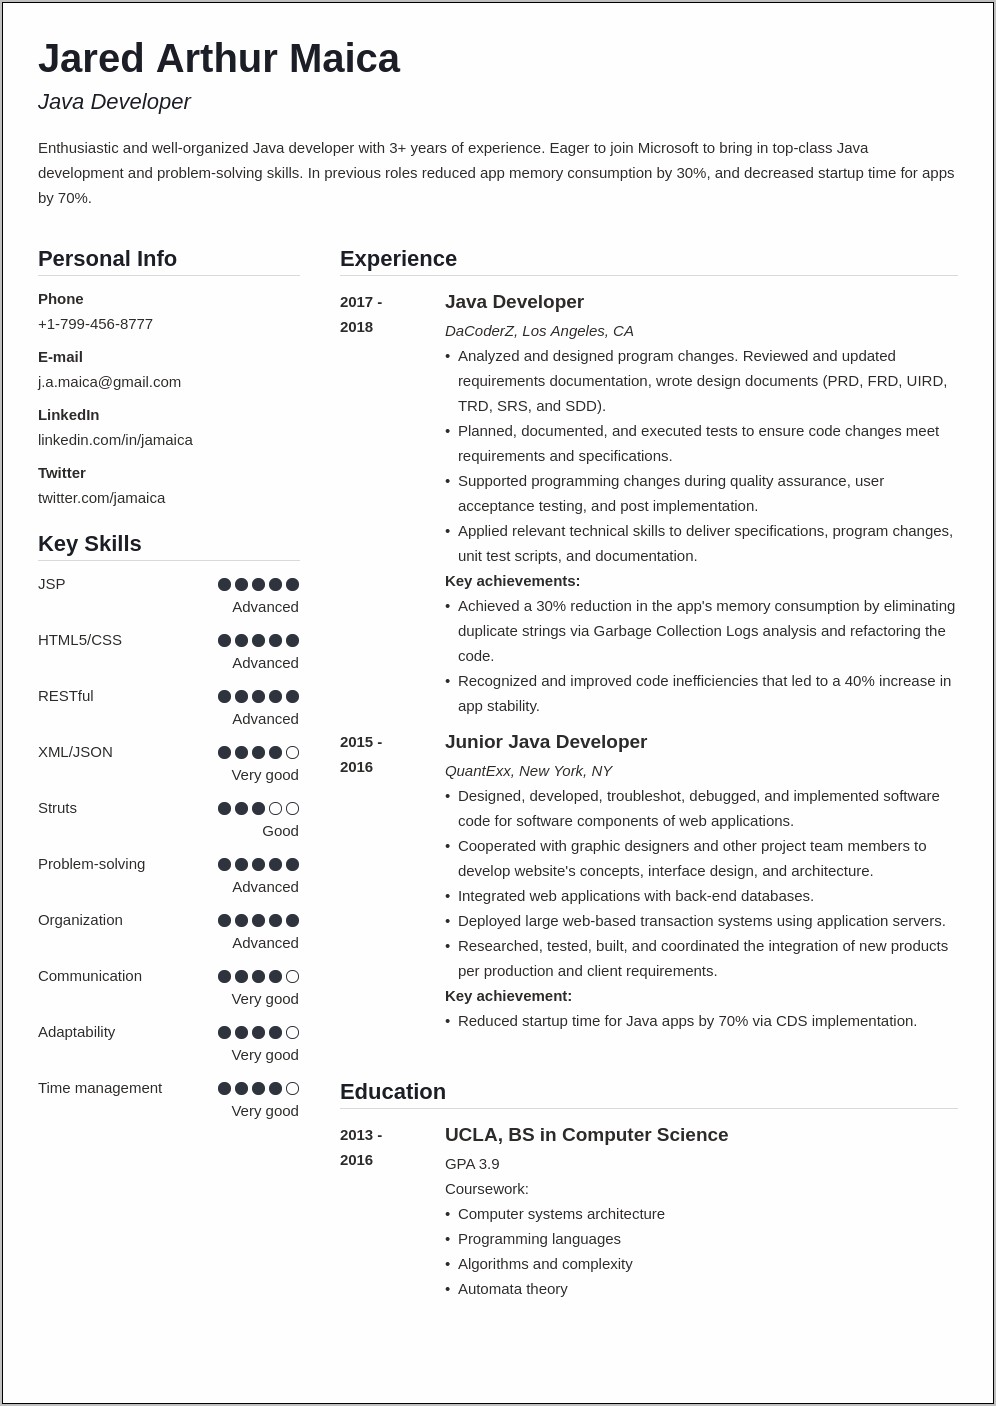 Java Developer Job Description Resume